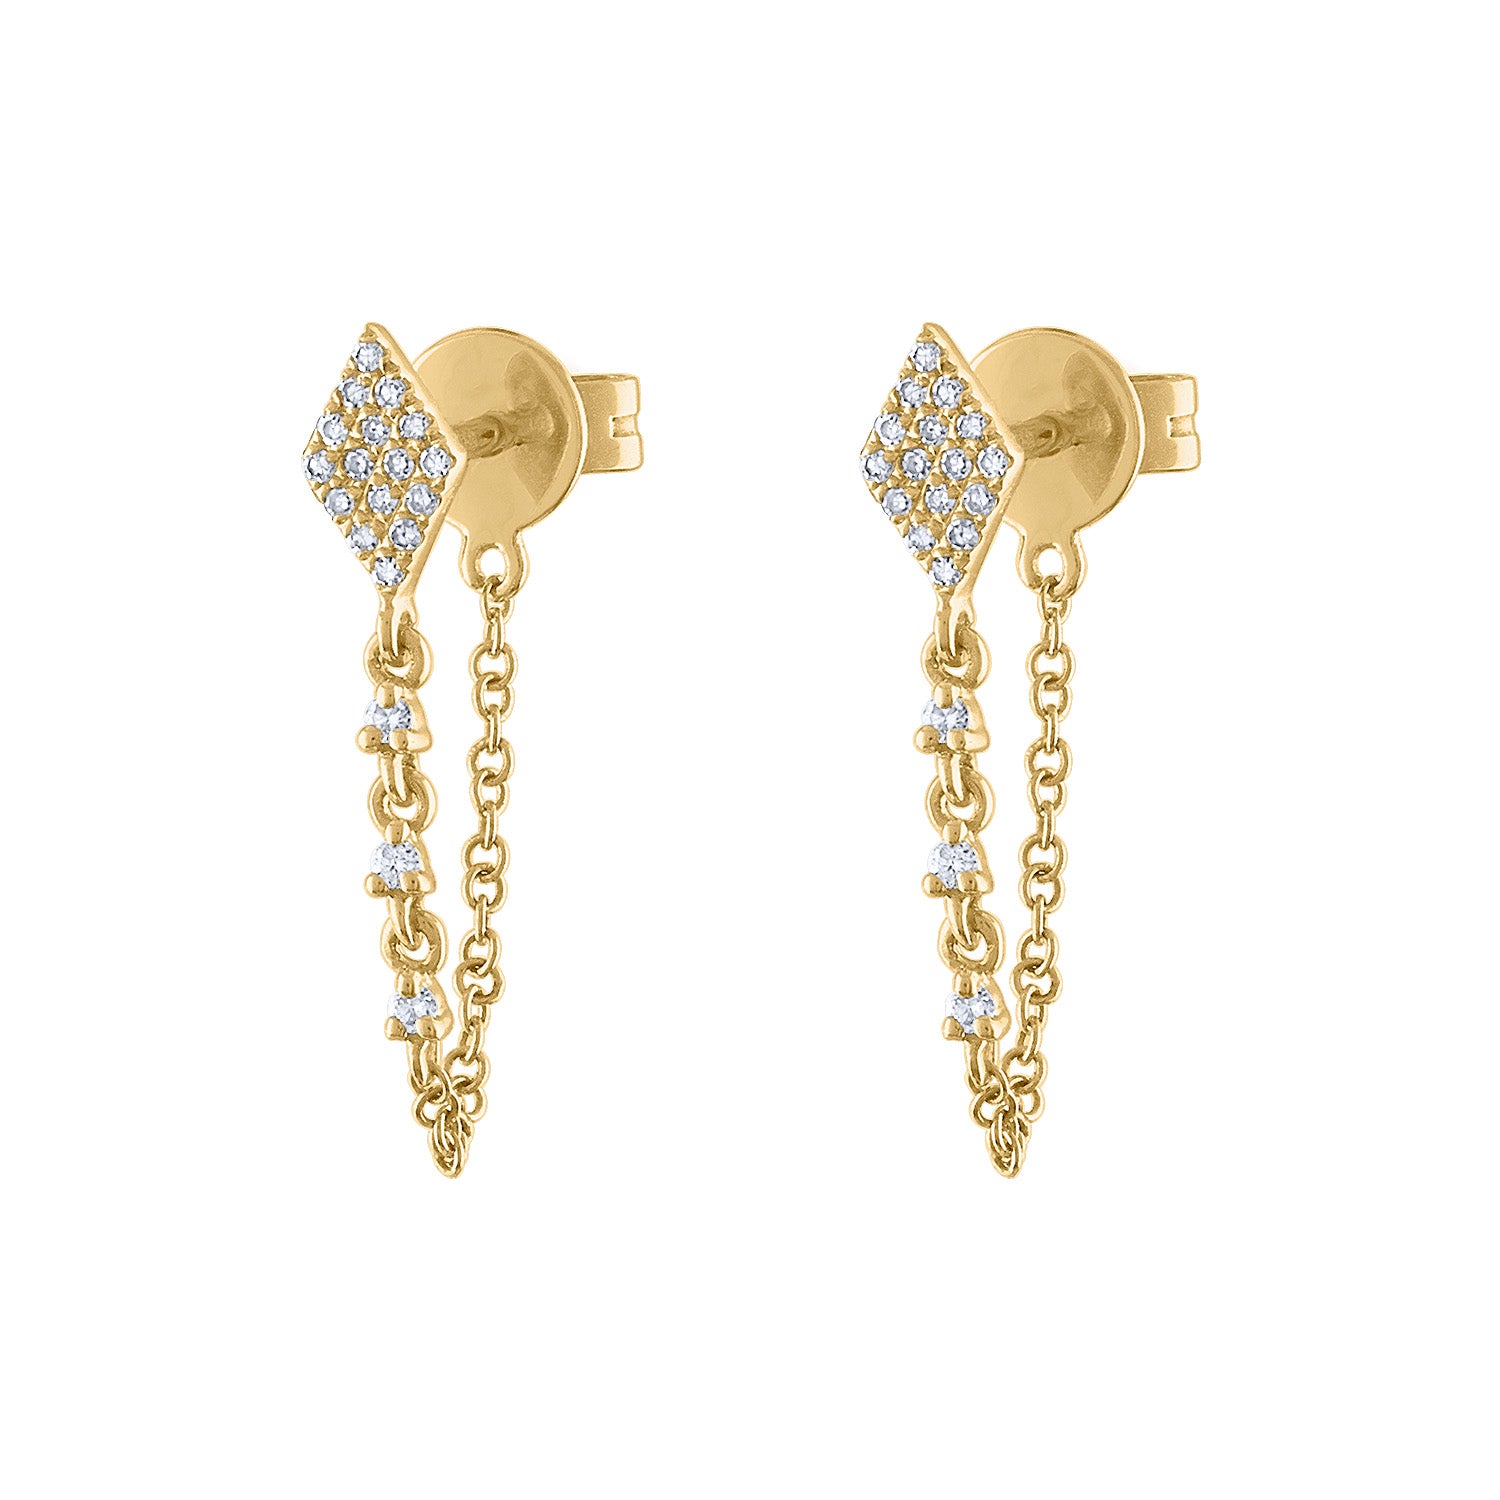 Long Earrings for Women - Hanging Boho Dangle Earrings with Chain Tassel in  Gold, Silver, or Rose